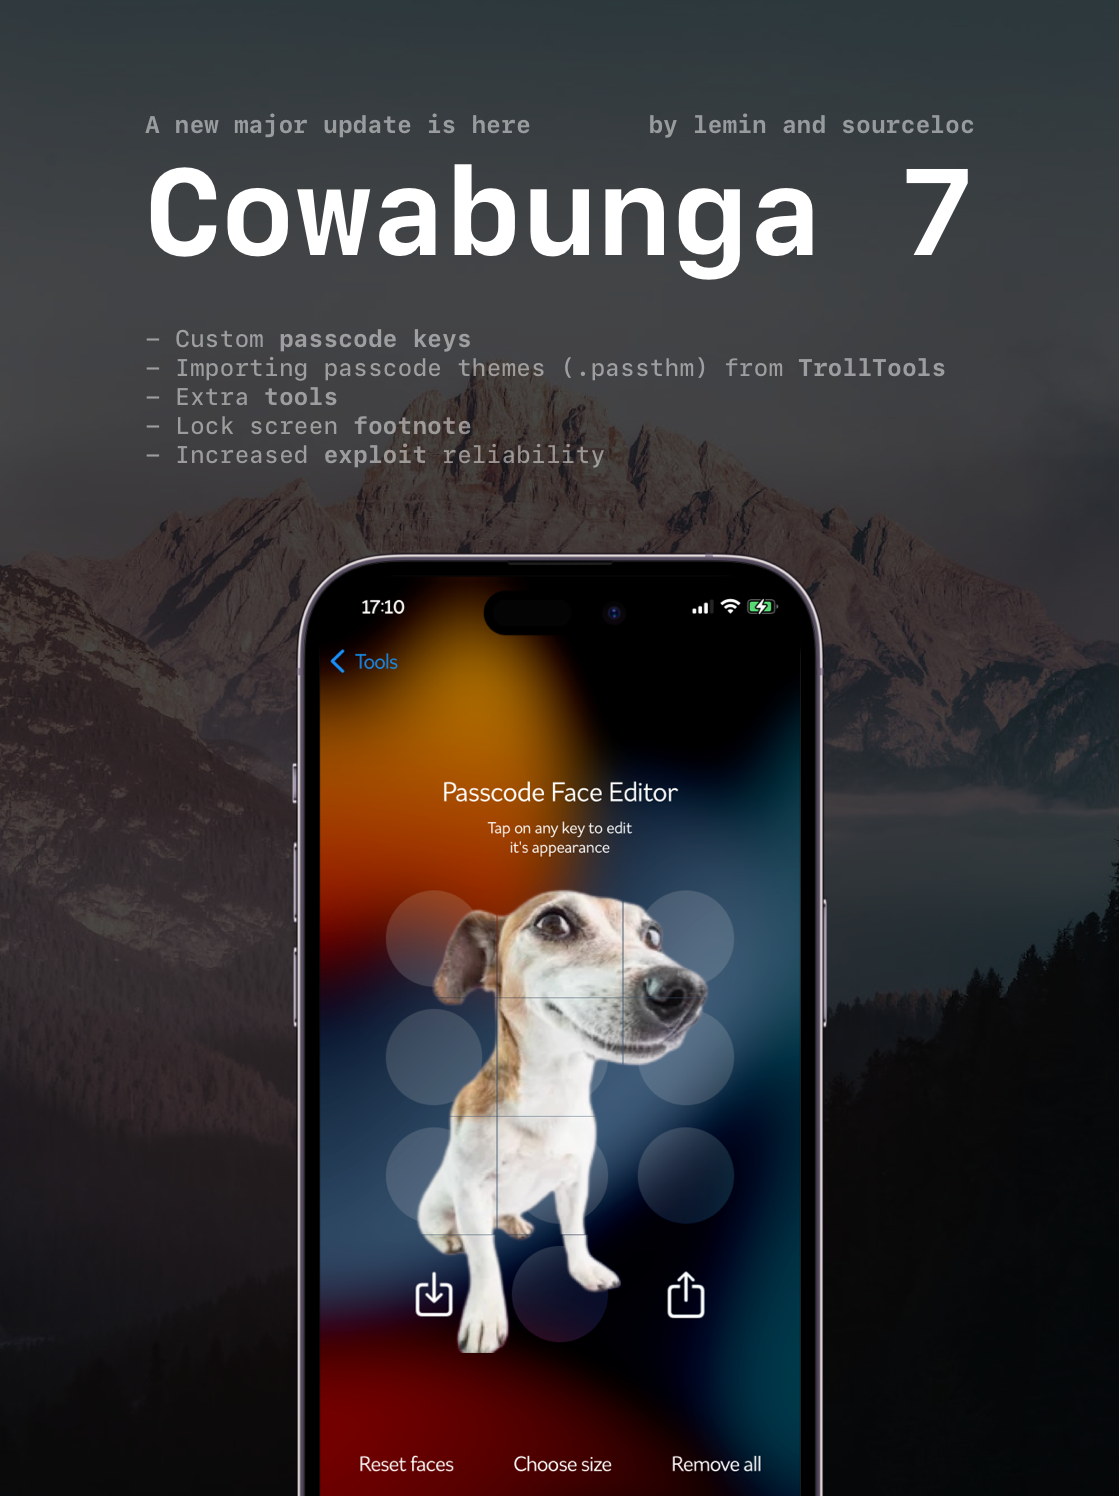 Cowabunga 7.0 new features.